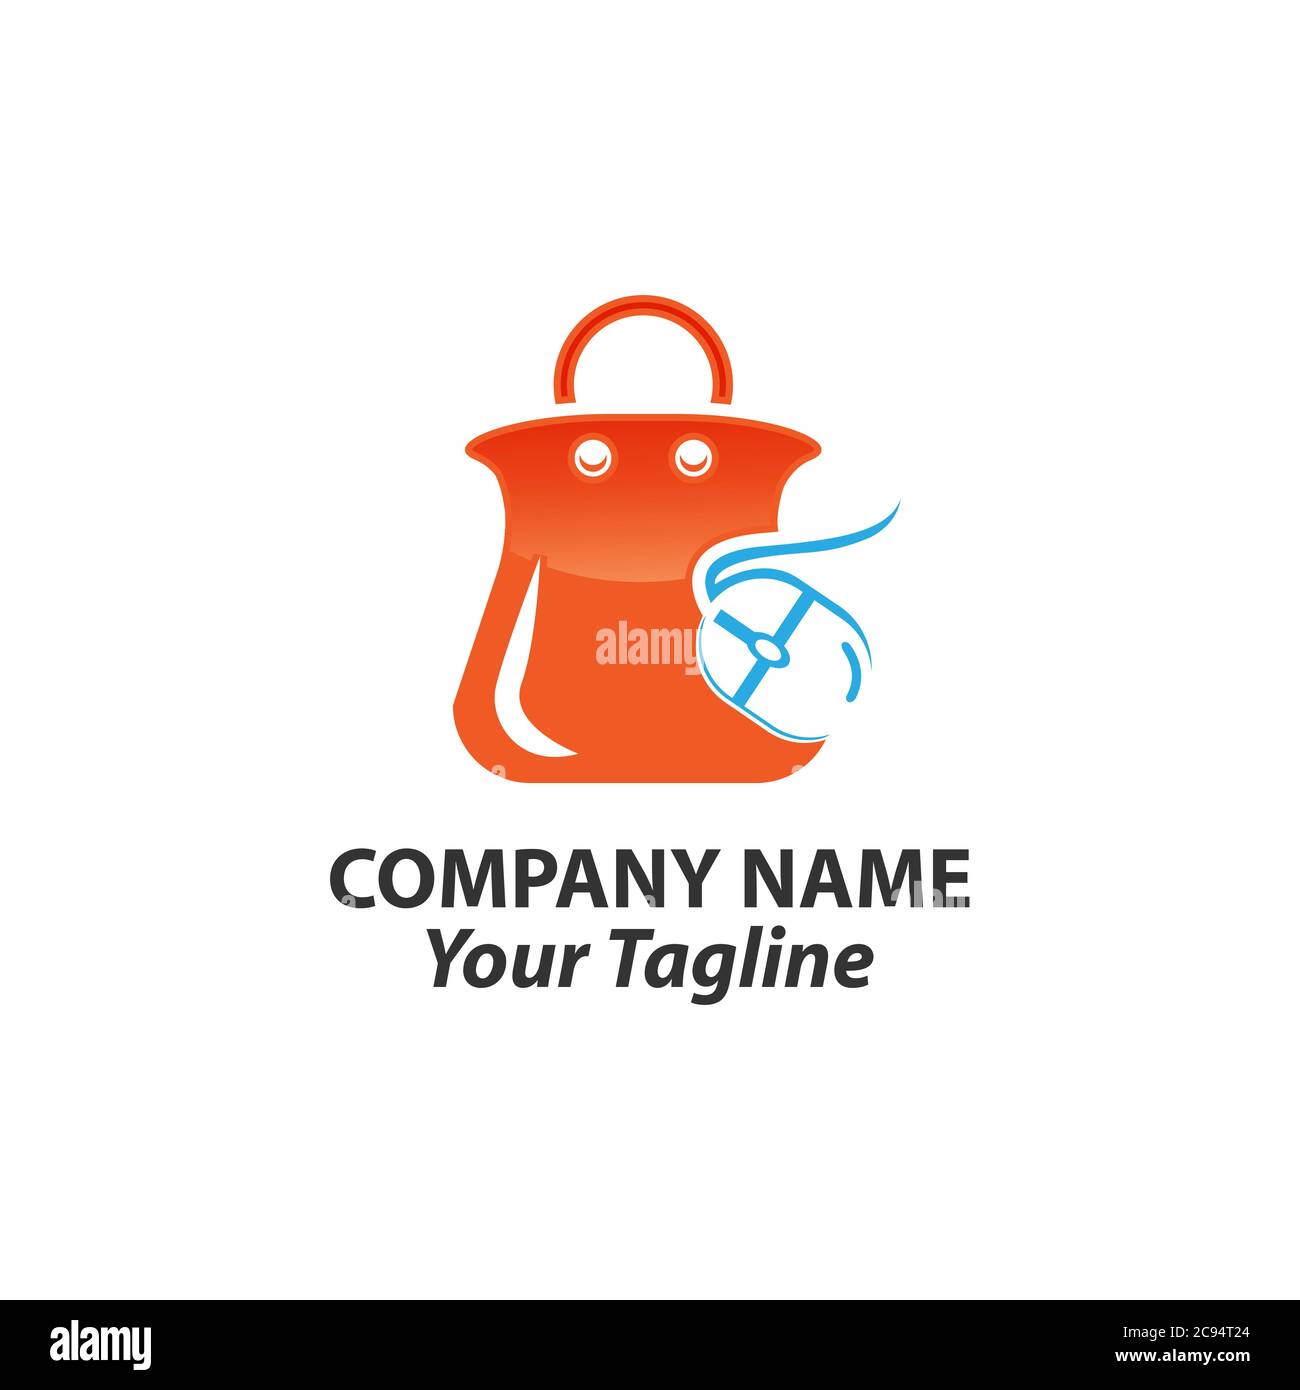 Online Shop Logo designs Template, Vector illustration.EPS 10 Stock Vector